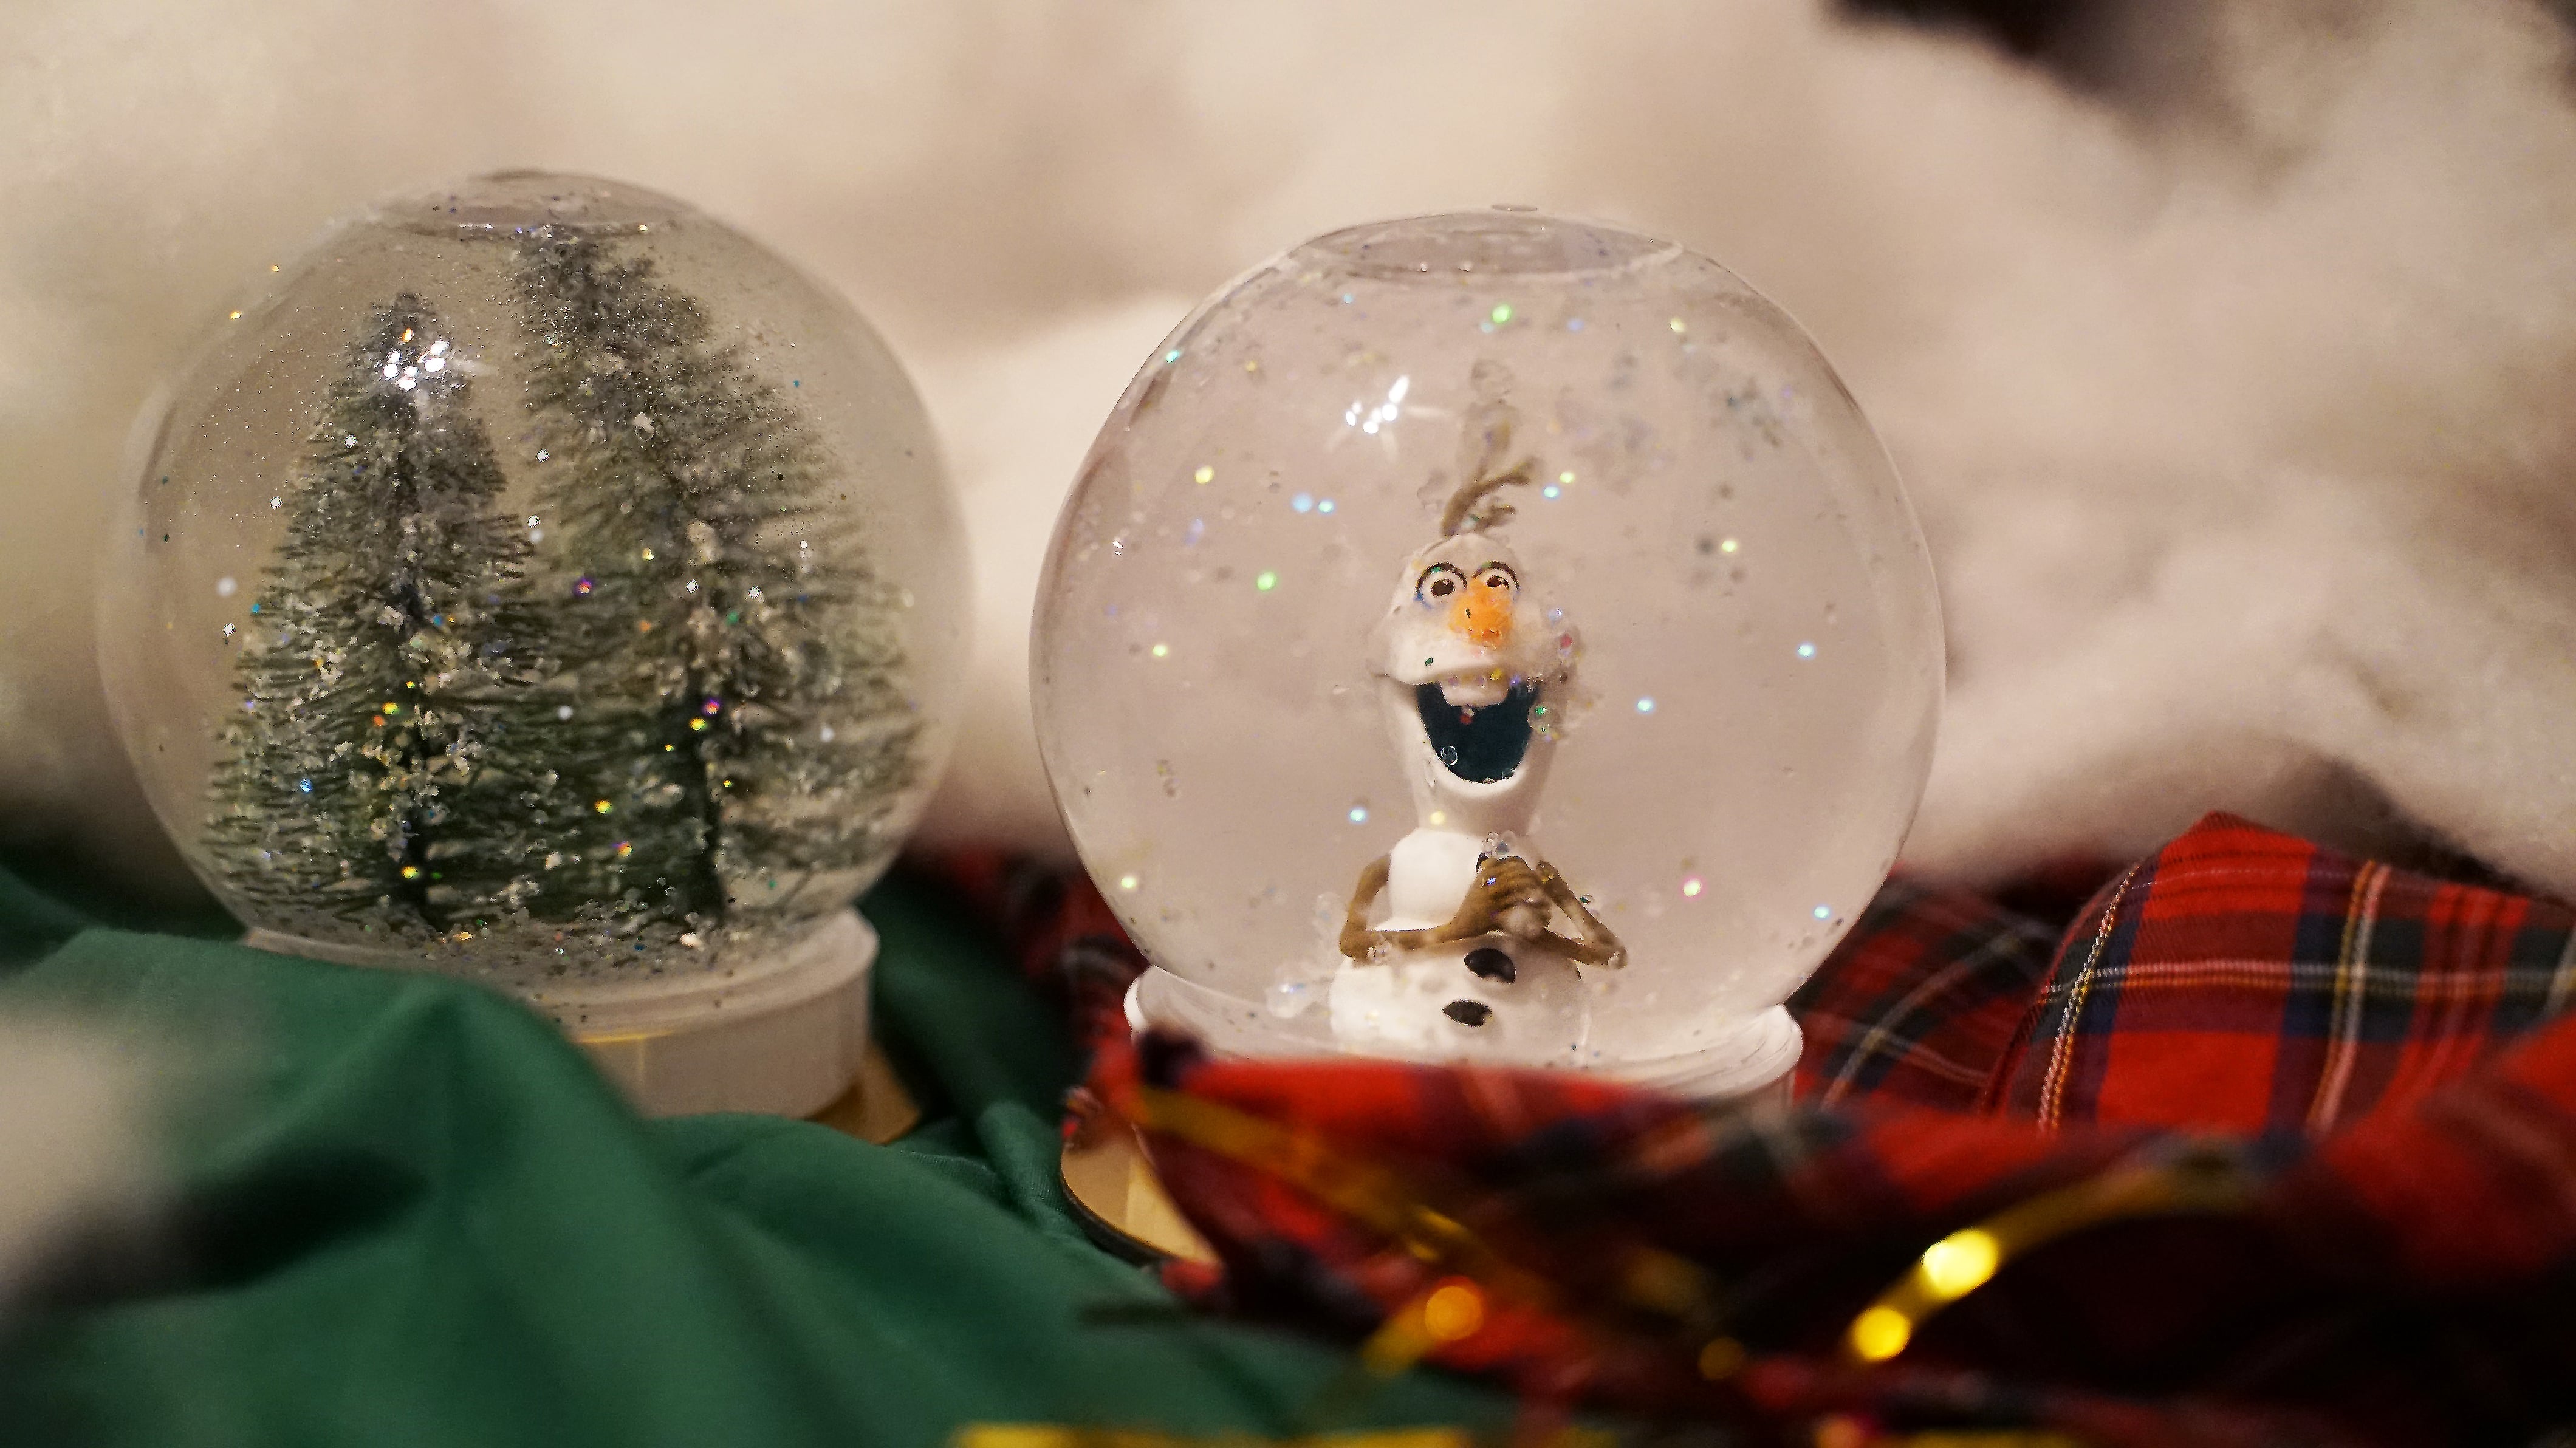 25 DIY Snow Globe Ideas To Make Your Own Snow Globes